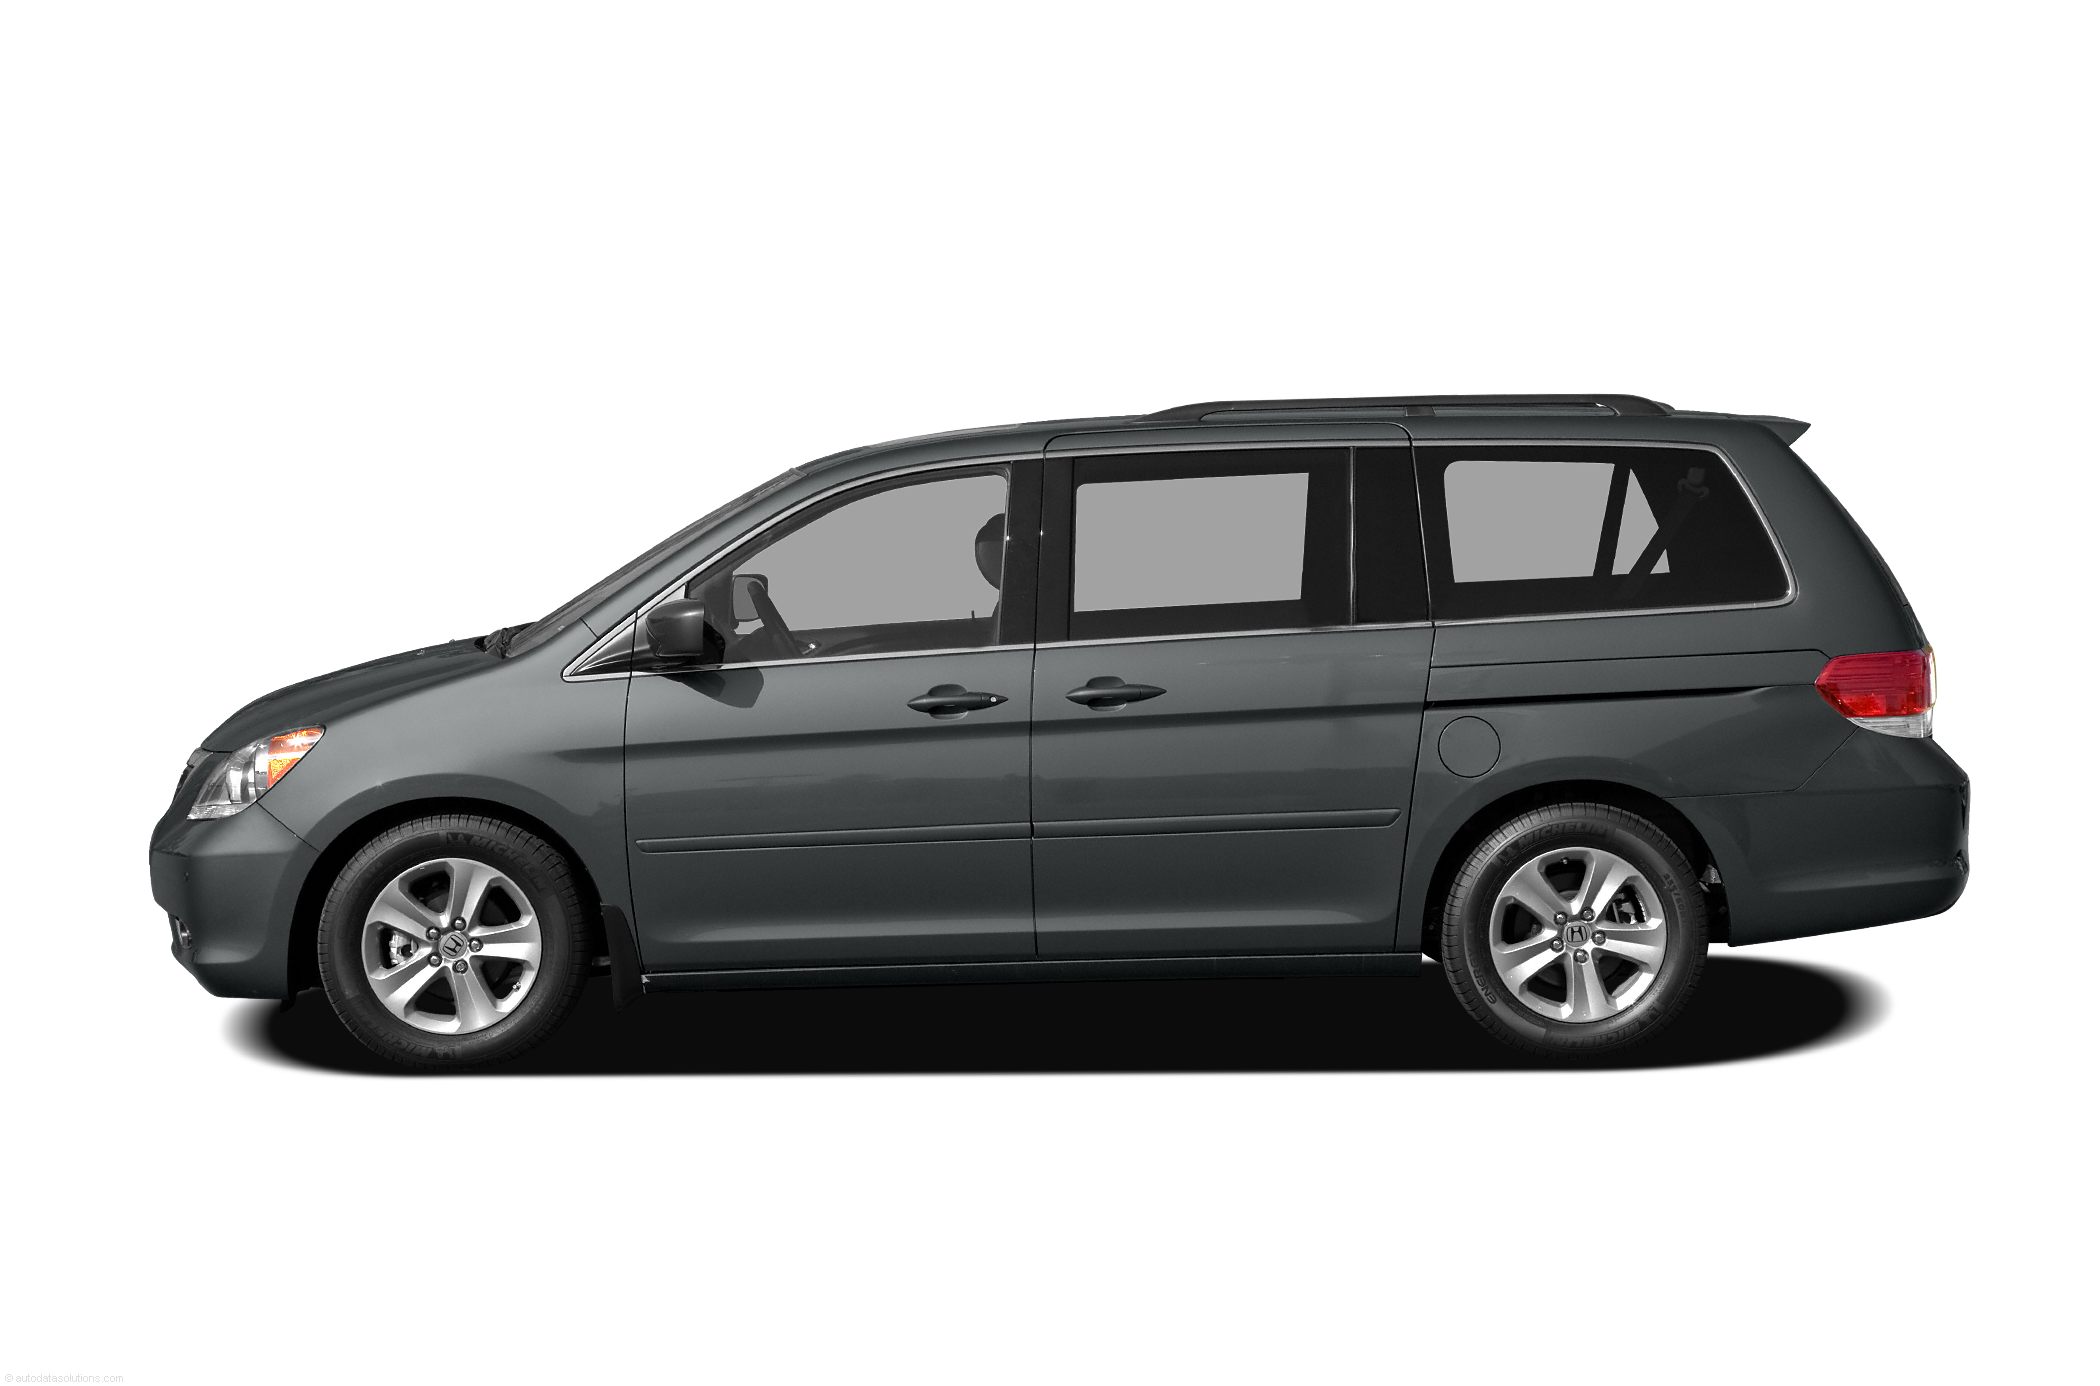 2010 Honda Odyssey Minivan Van Lx Passenger Van Exterior Profile